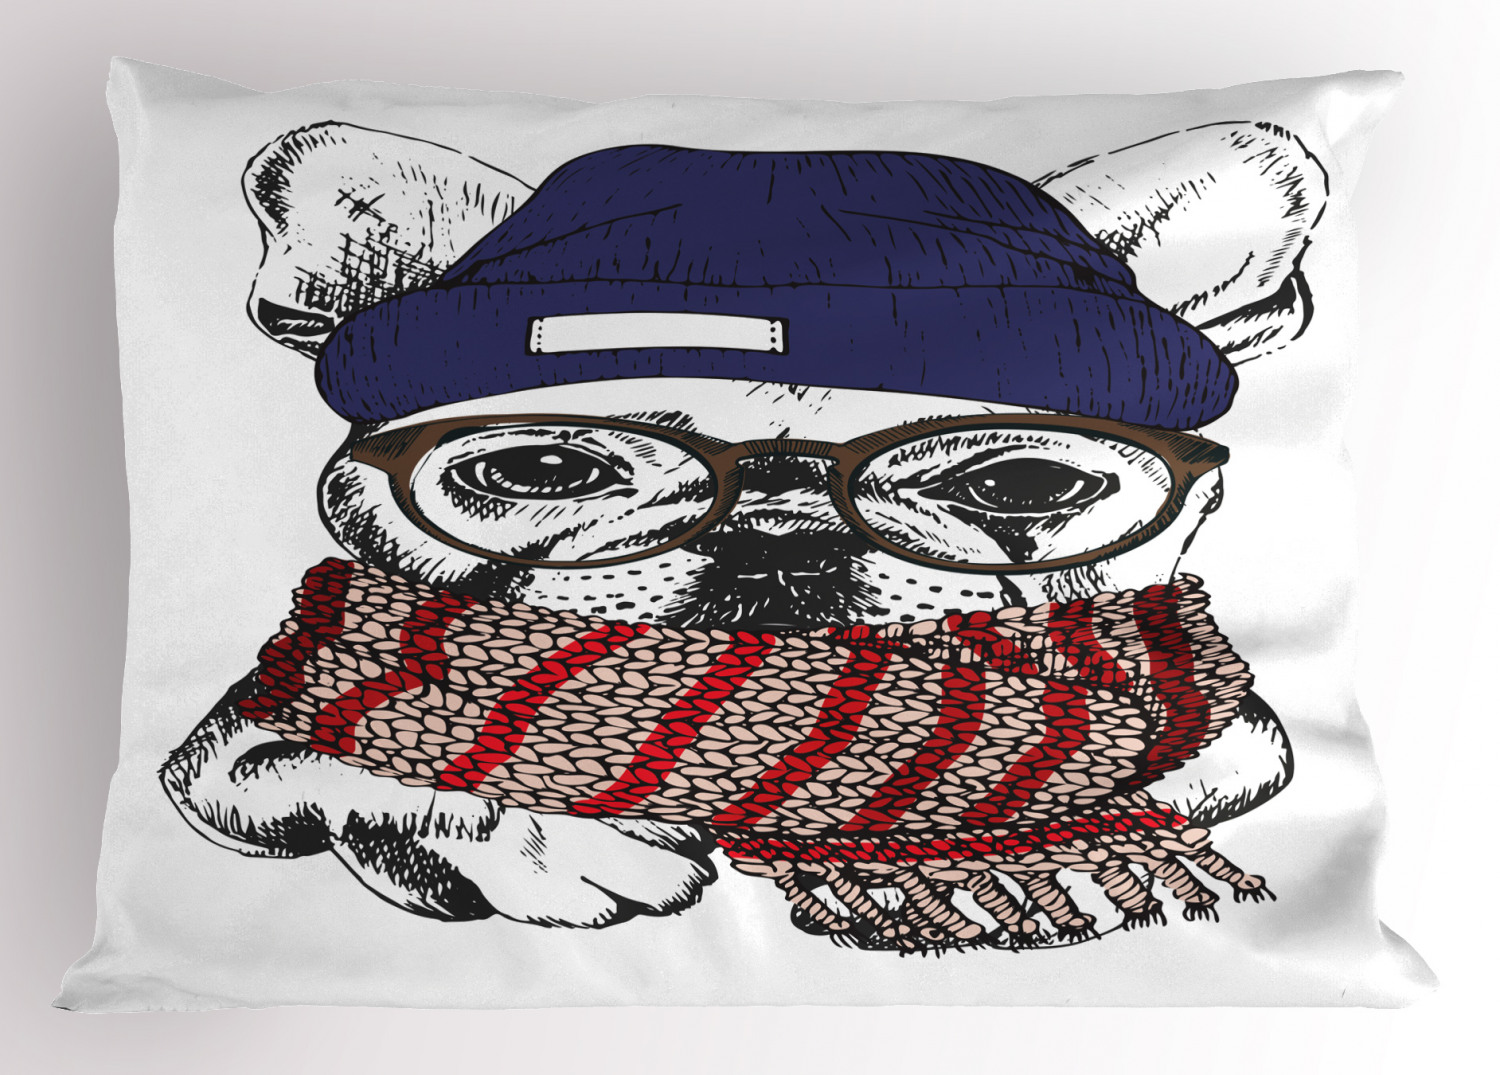 Details about   Bulldog Pillow Sham Decorative Pillowcase 3 Sizes for Bedroom Decor 